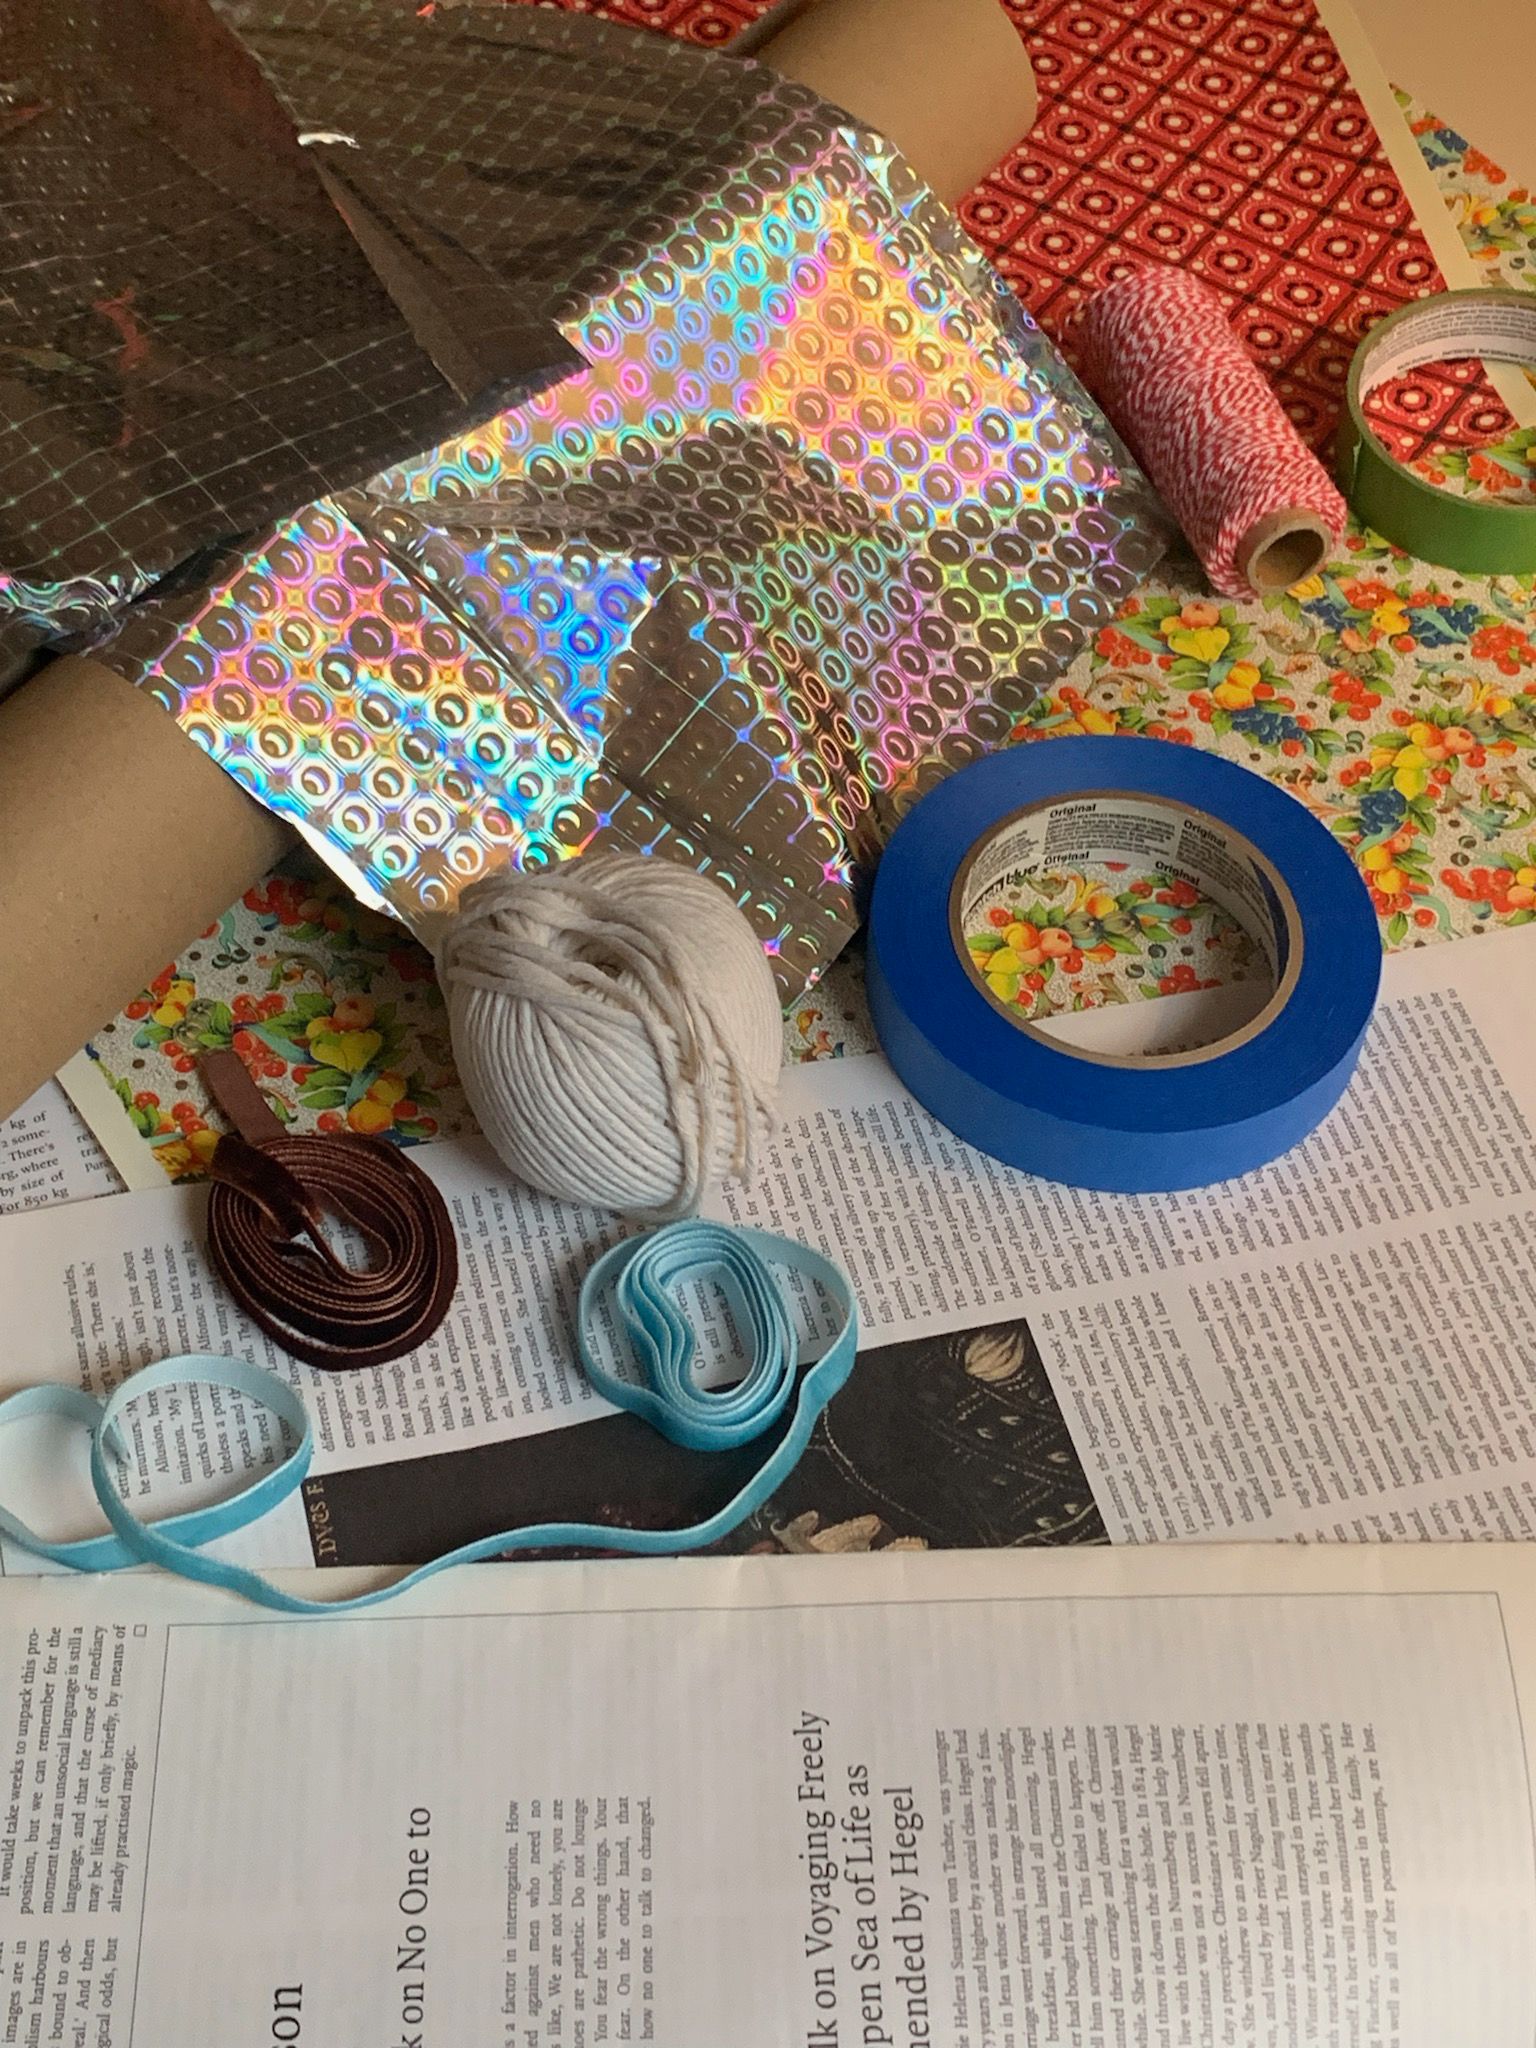 Best Craft Organizer Medium Washi Tape and Ribbon Dispenser 4 pack